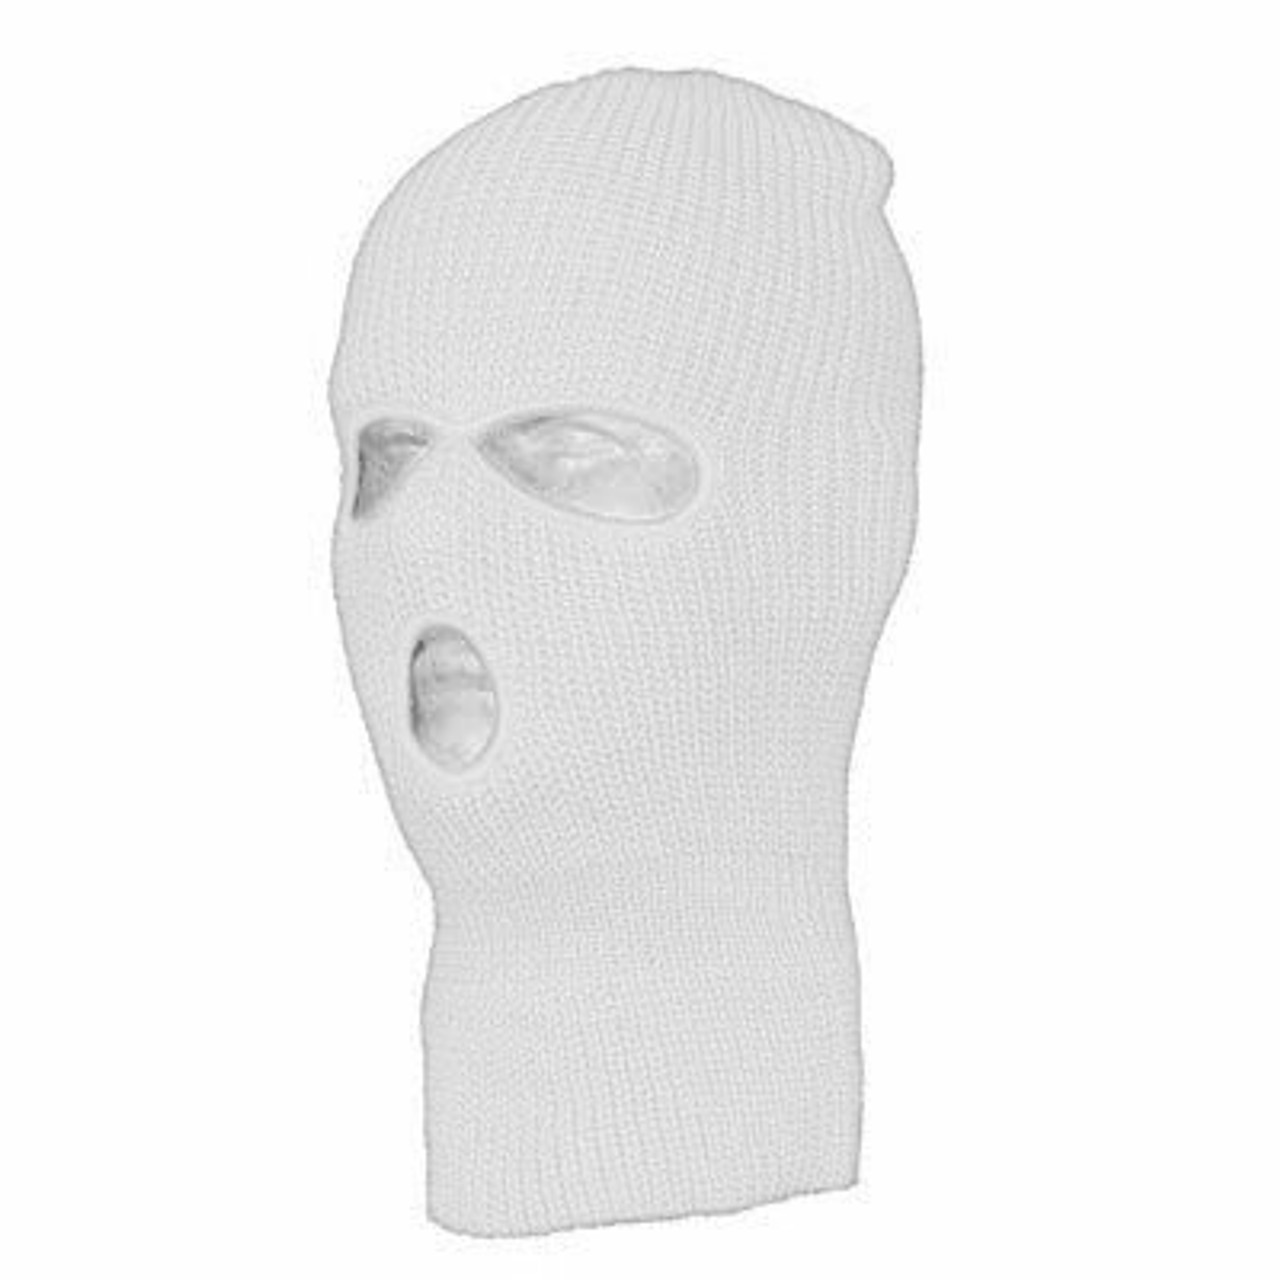 Acrylic Ski Mask WHITE - Army Surplus Warehouse, Inc.